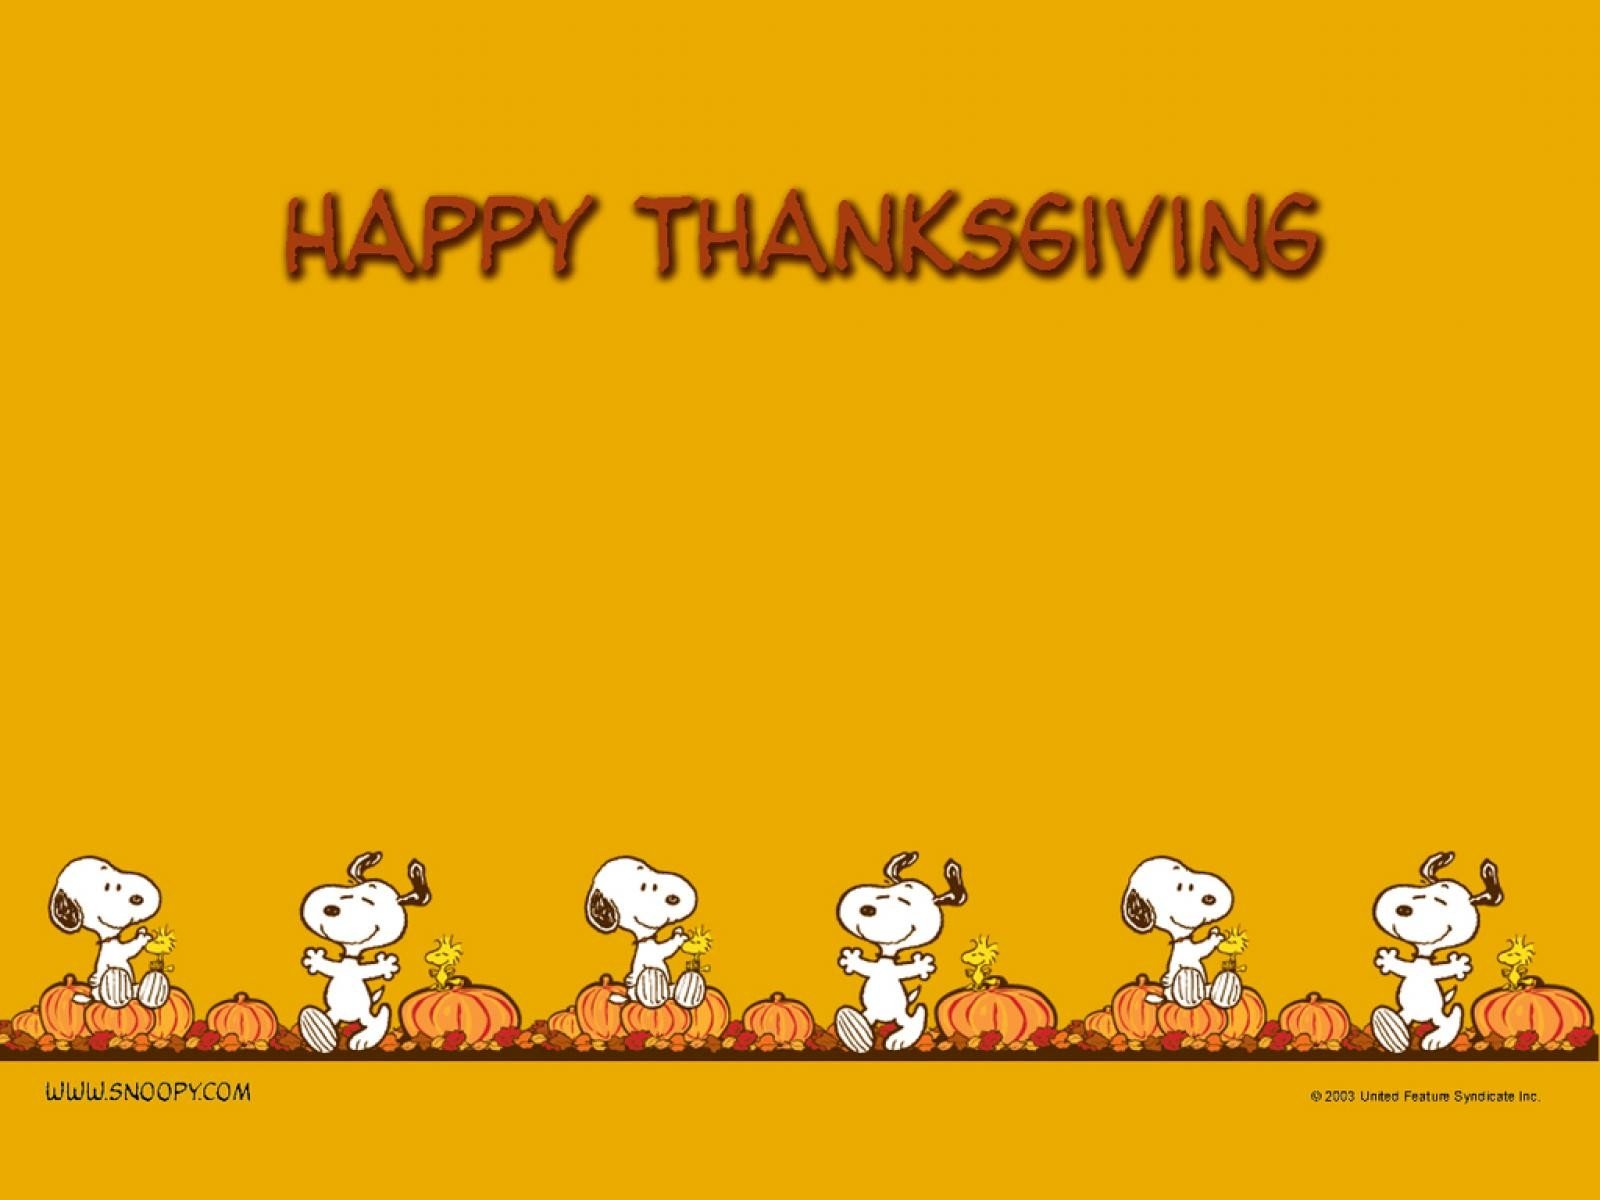 Peanuts (comic), Snoopy, Thanksgiving Wallpaper